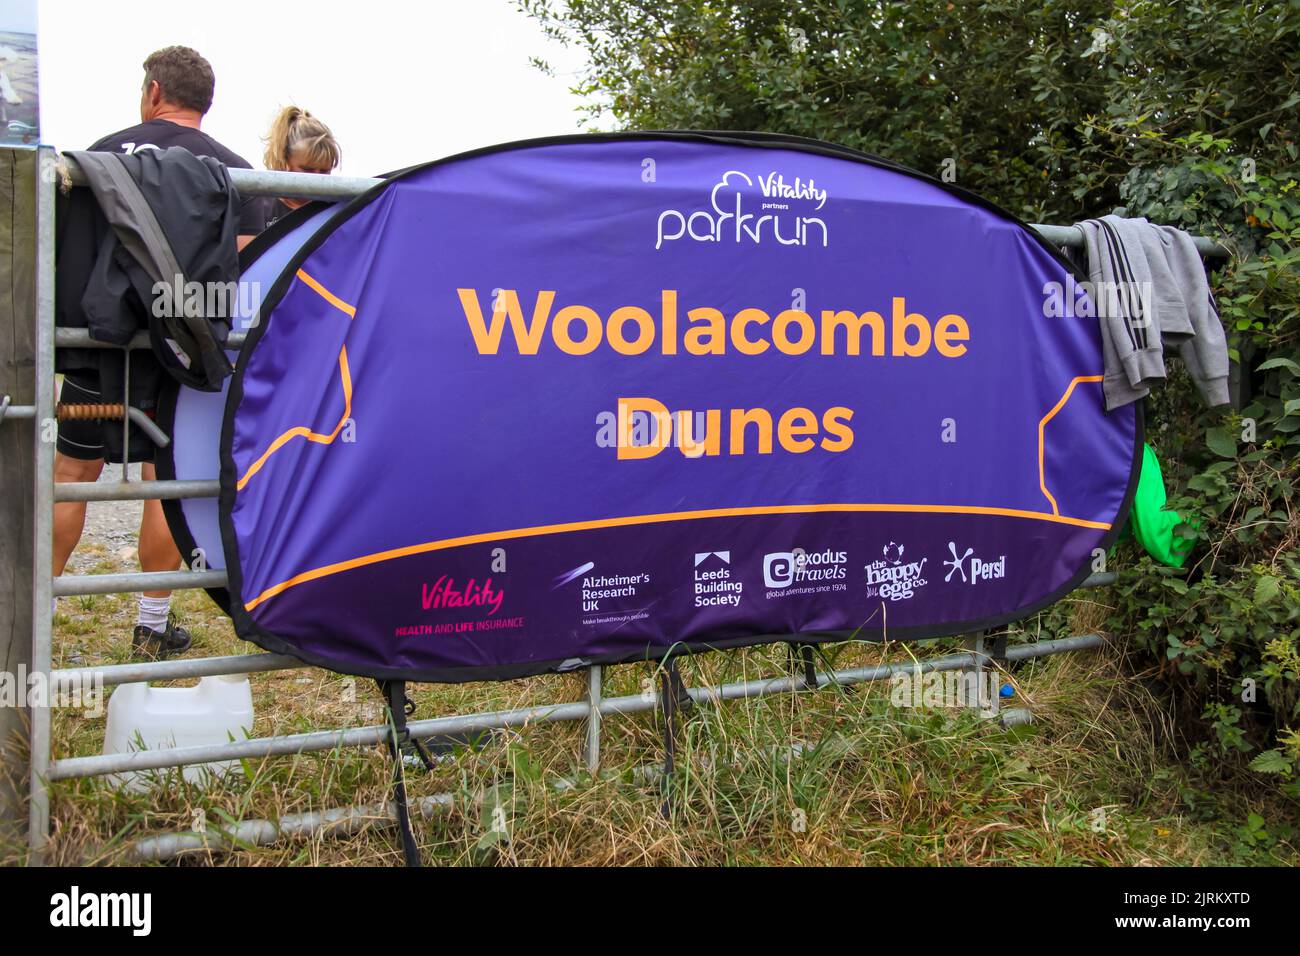 Woolacombe Dunes Park Run sign, North Devon, England, UK, August 2022 Stock Photo